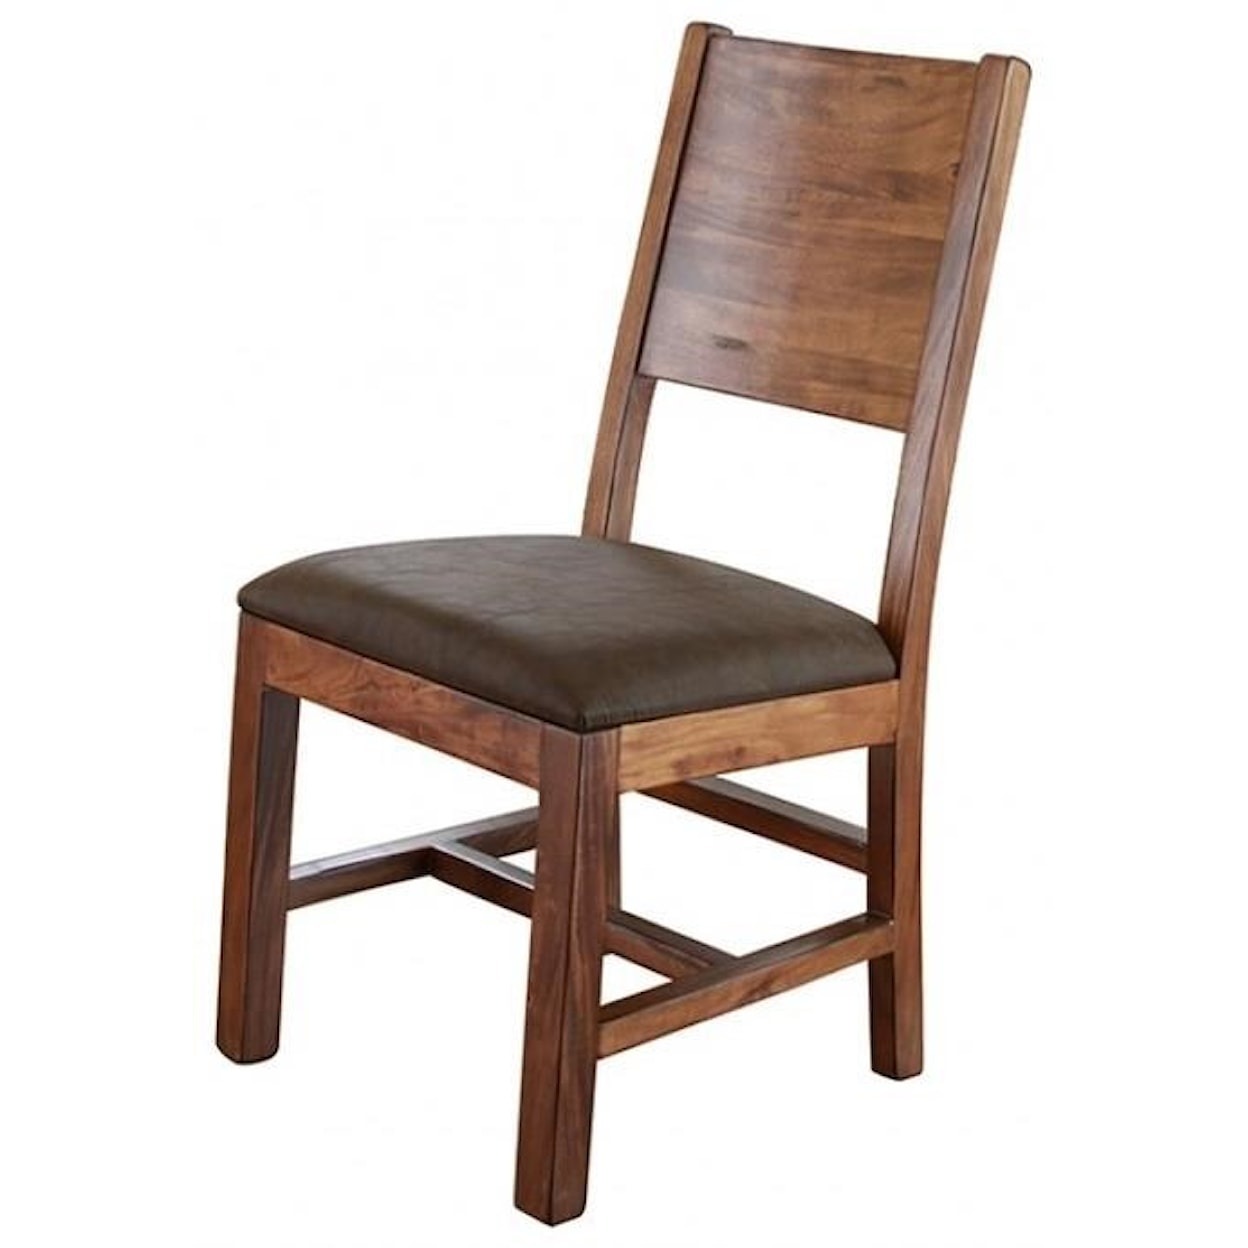 VFM Signature Parota Chair with Solid Wood Back